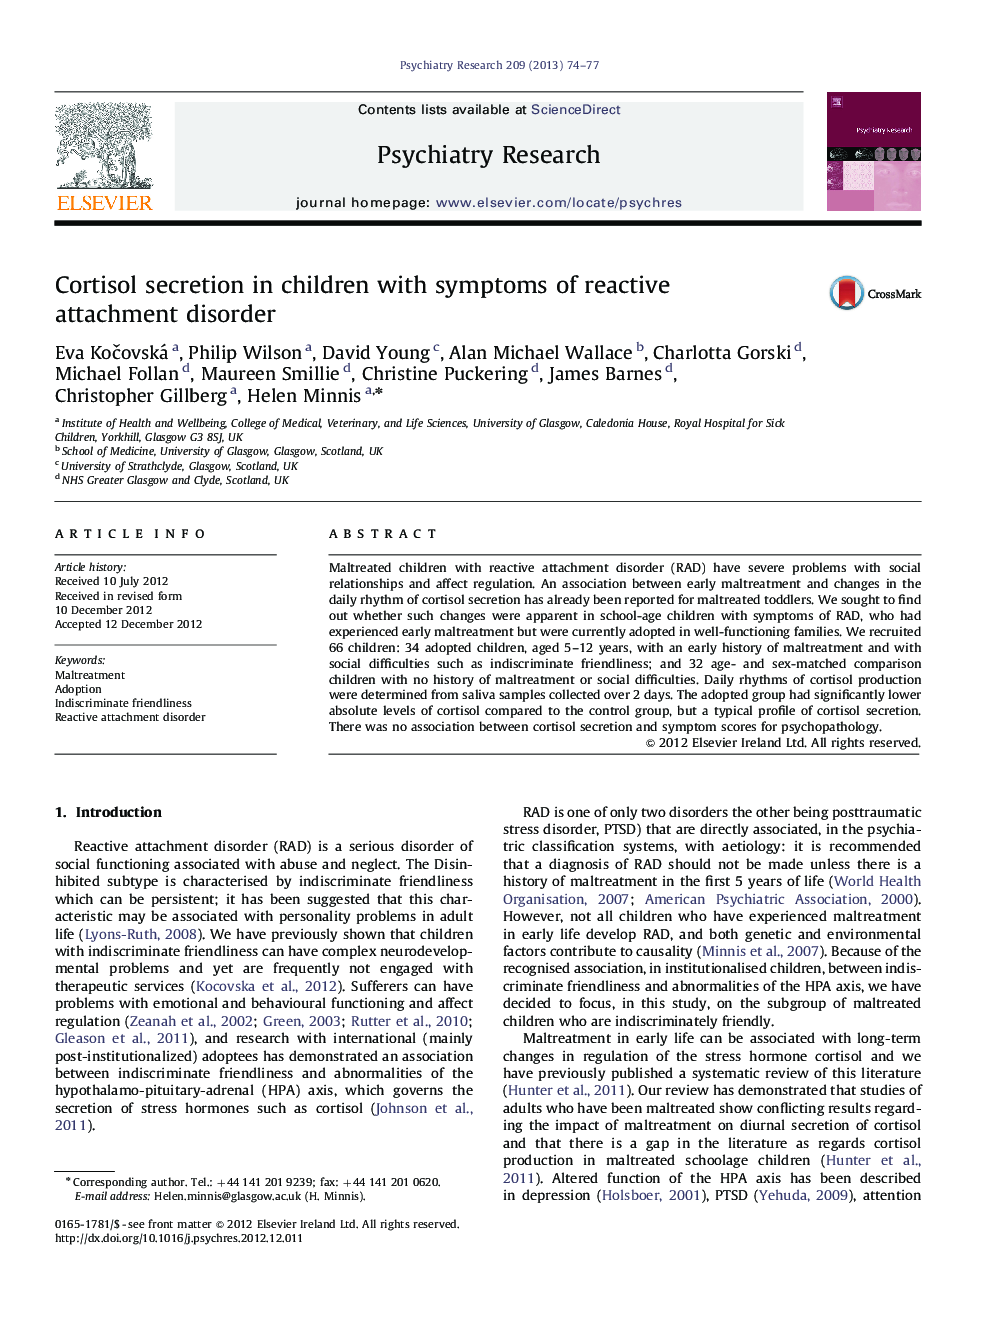 Cortisol secretion in children with symptoms of reactive attachment disorder